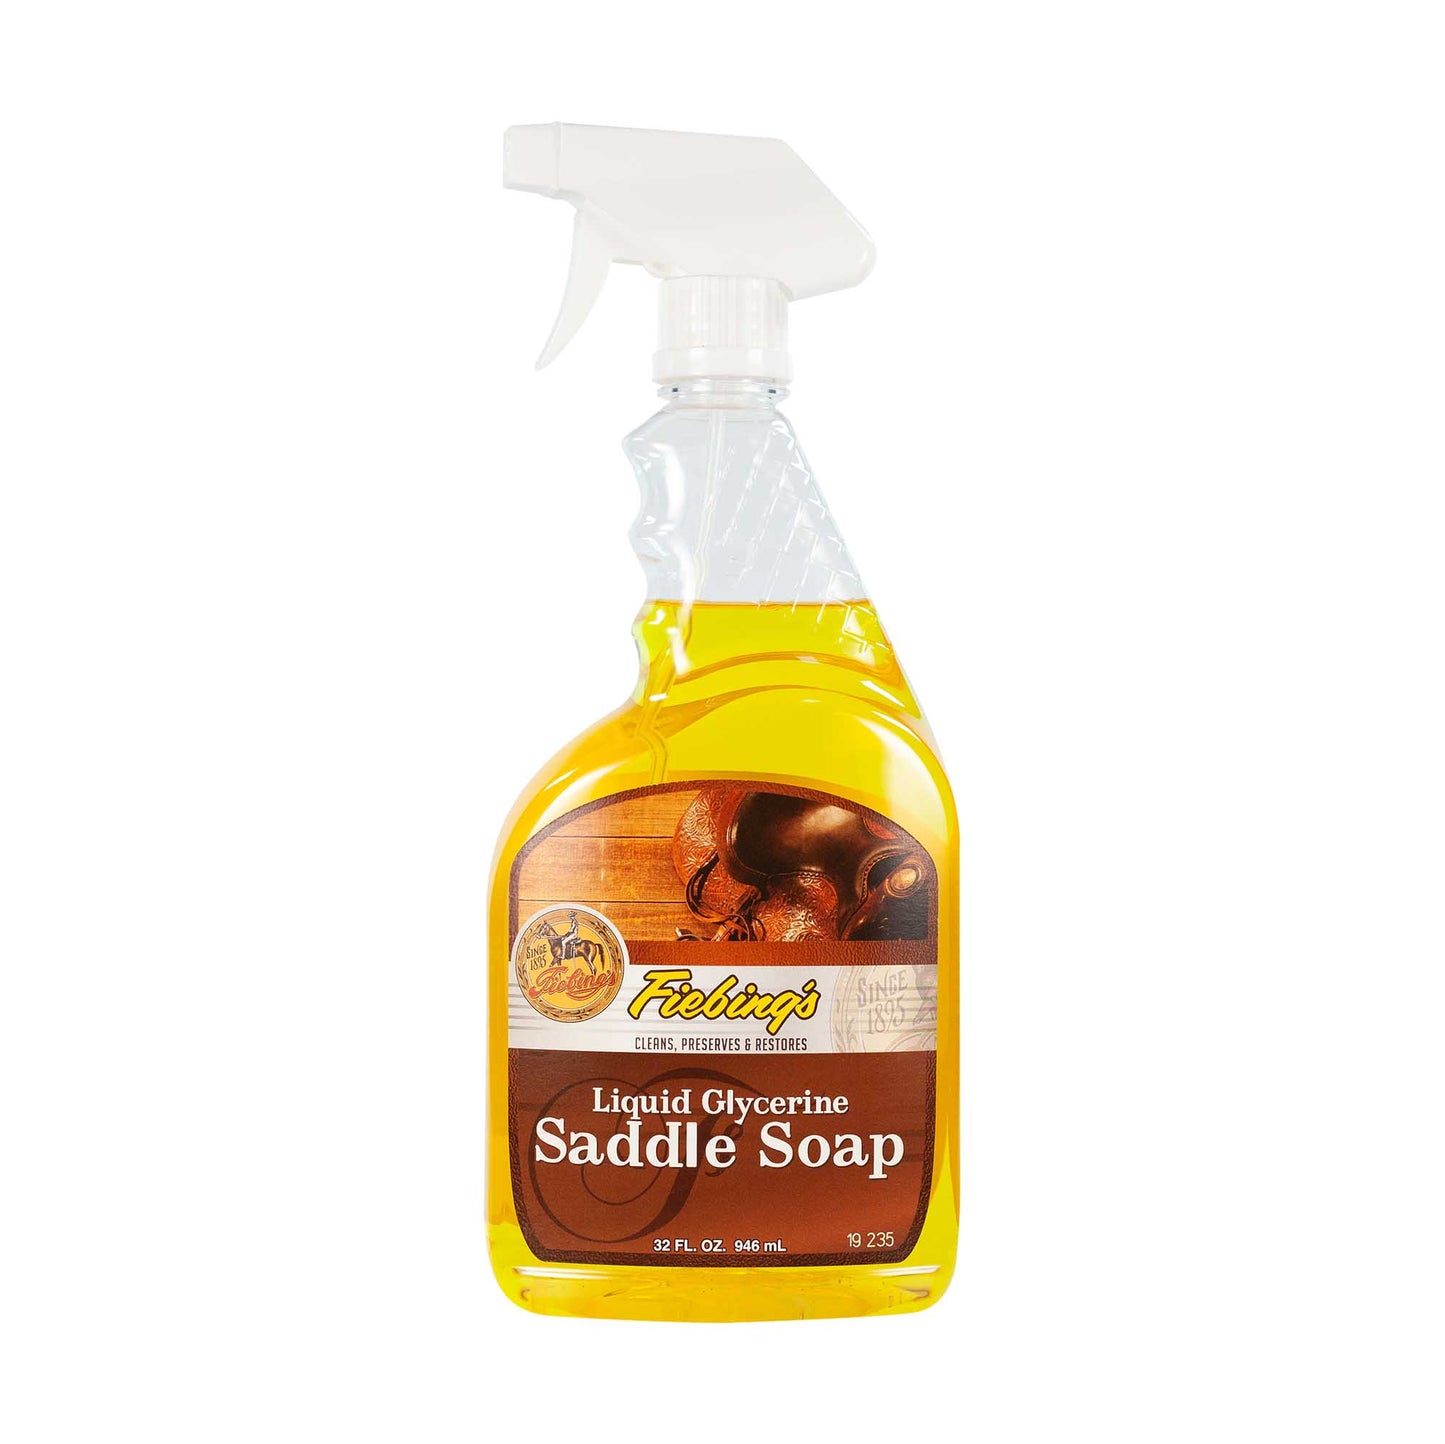 Fiebing’s liquid glycerin saddle soap